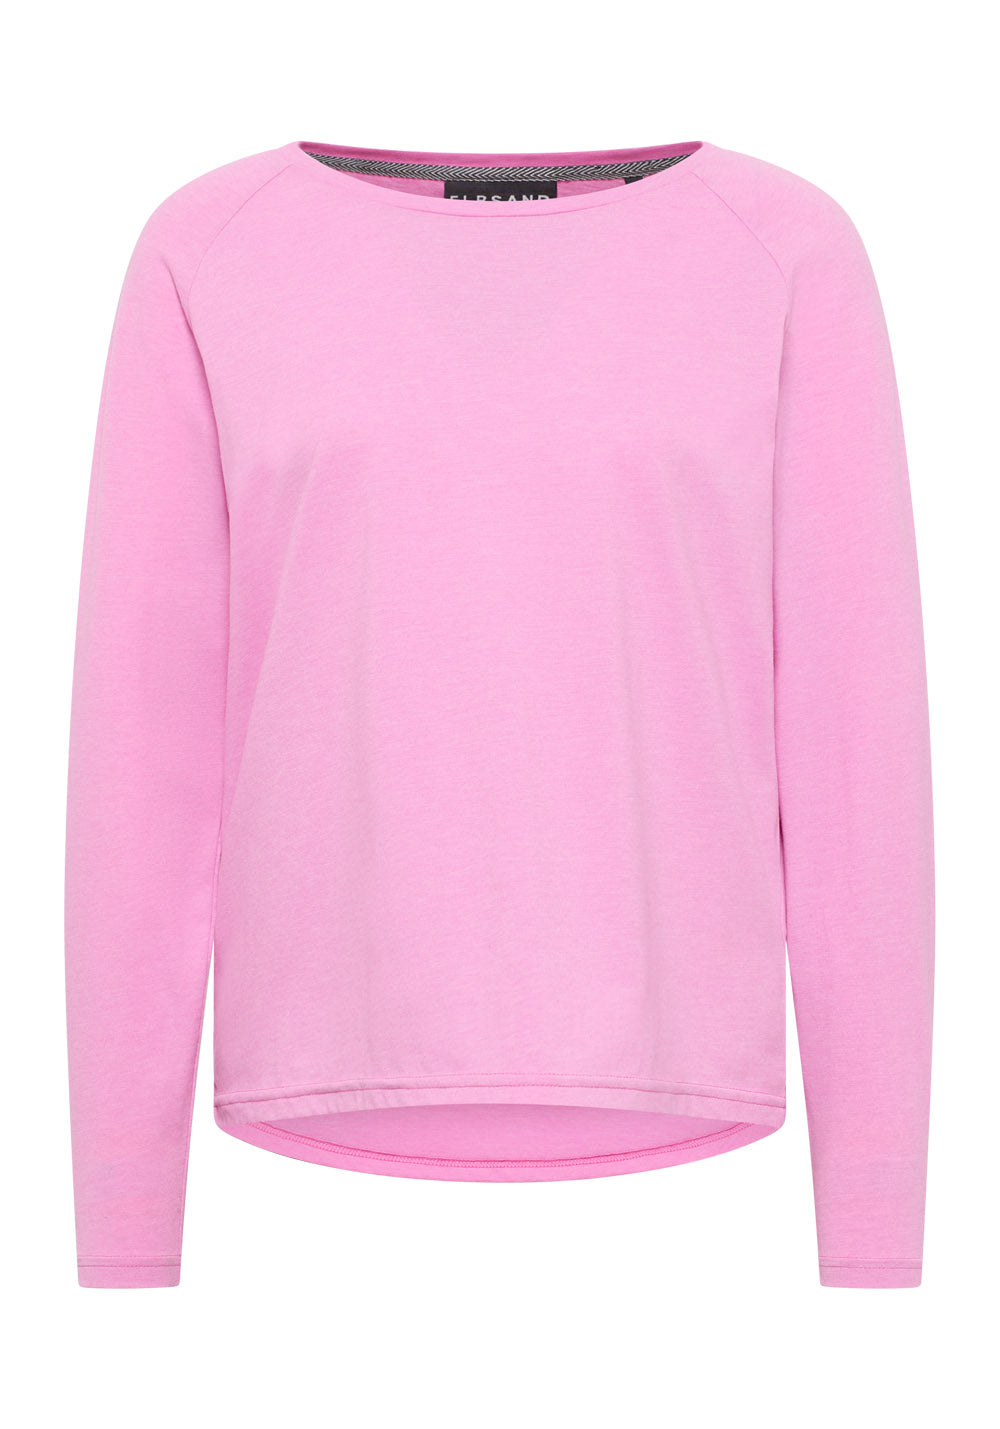 Elbsand | Longsleeve Shirt - Tira | 549 Pink Mauve melage